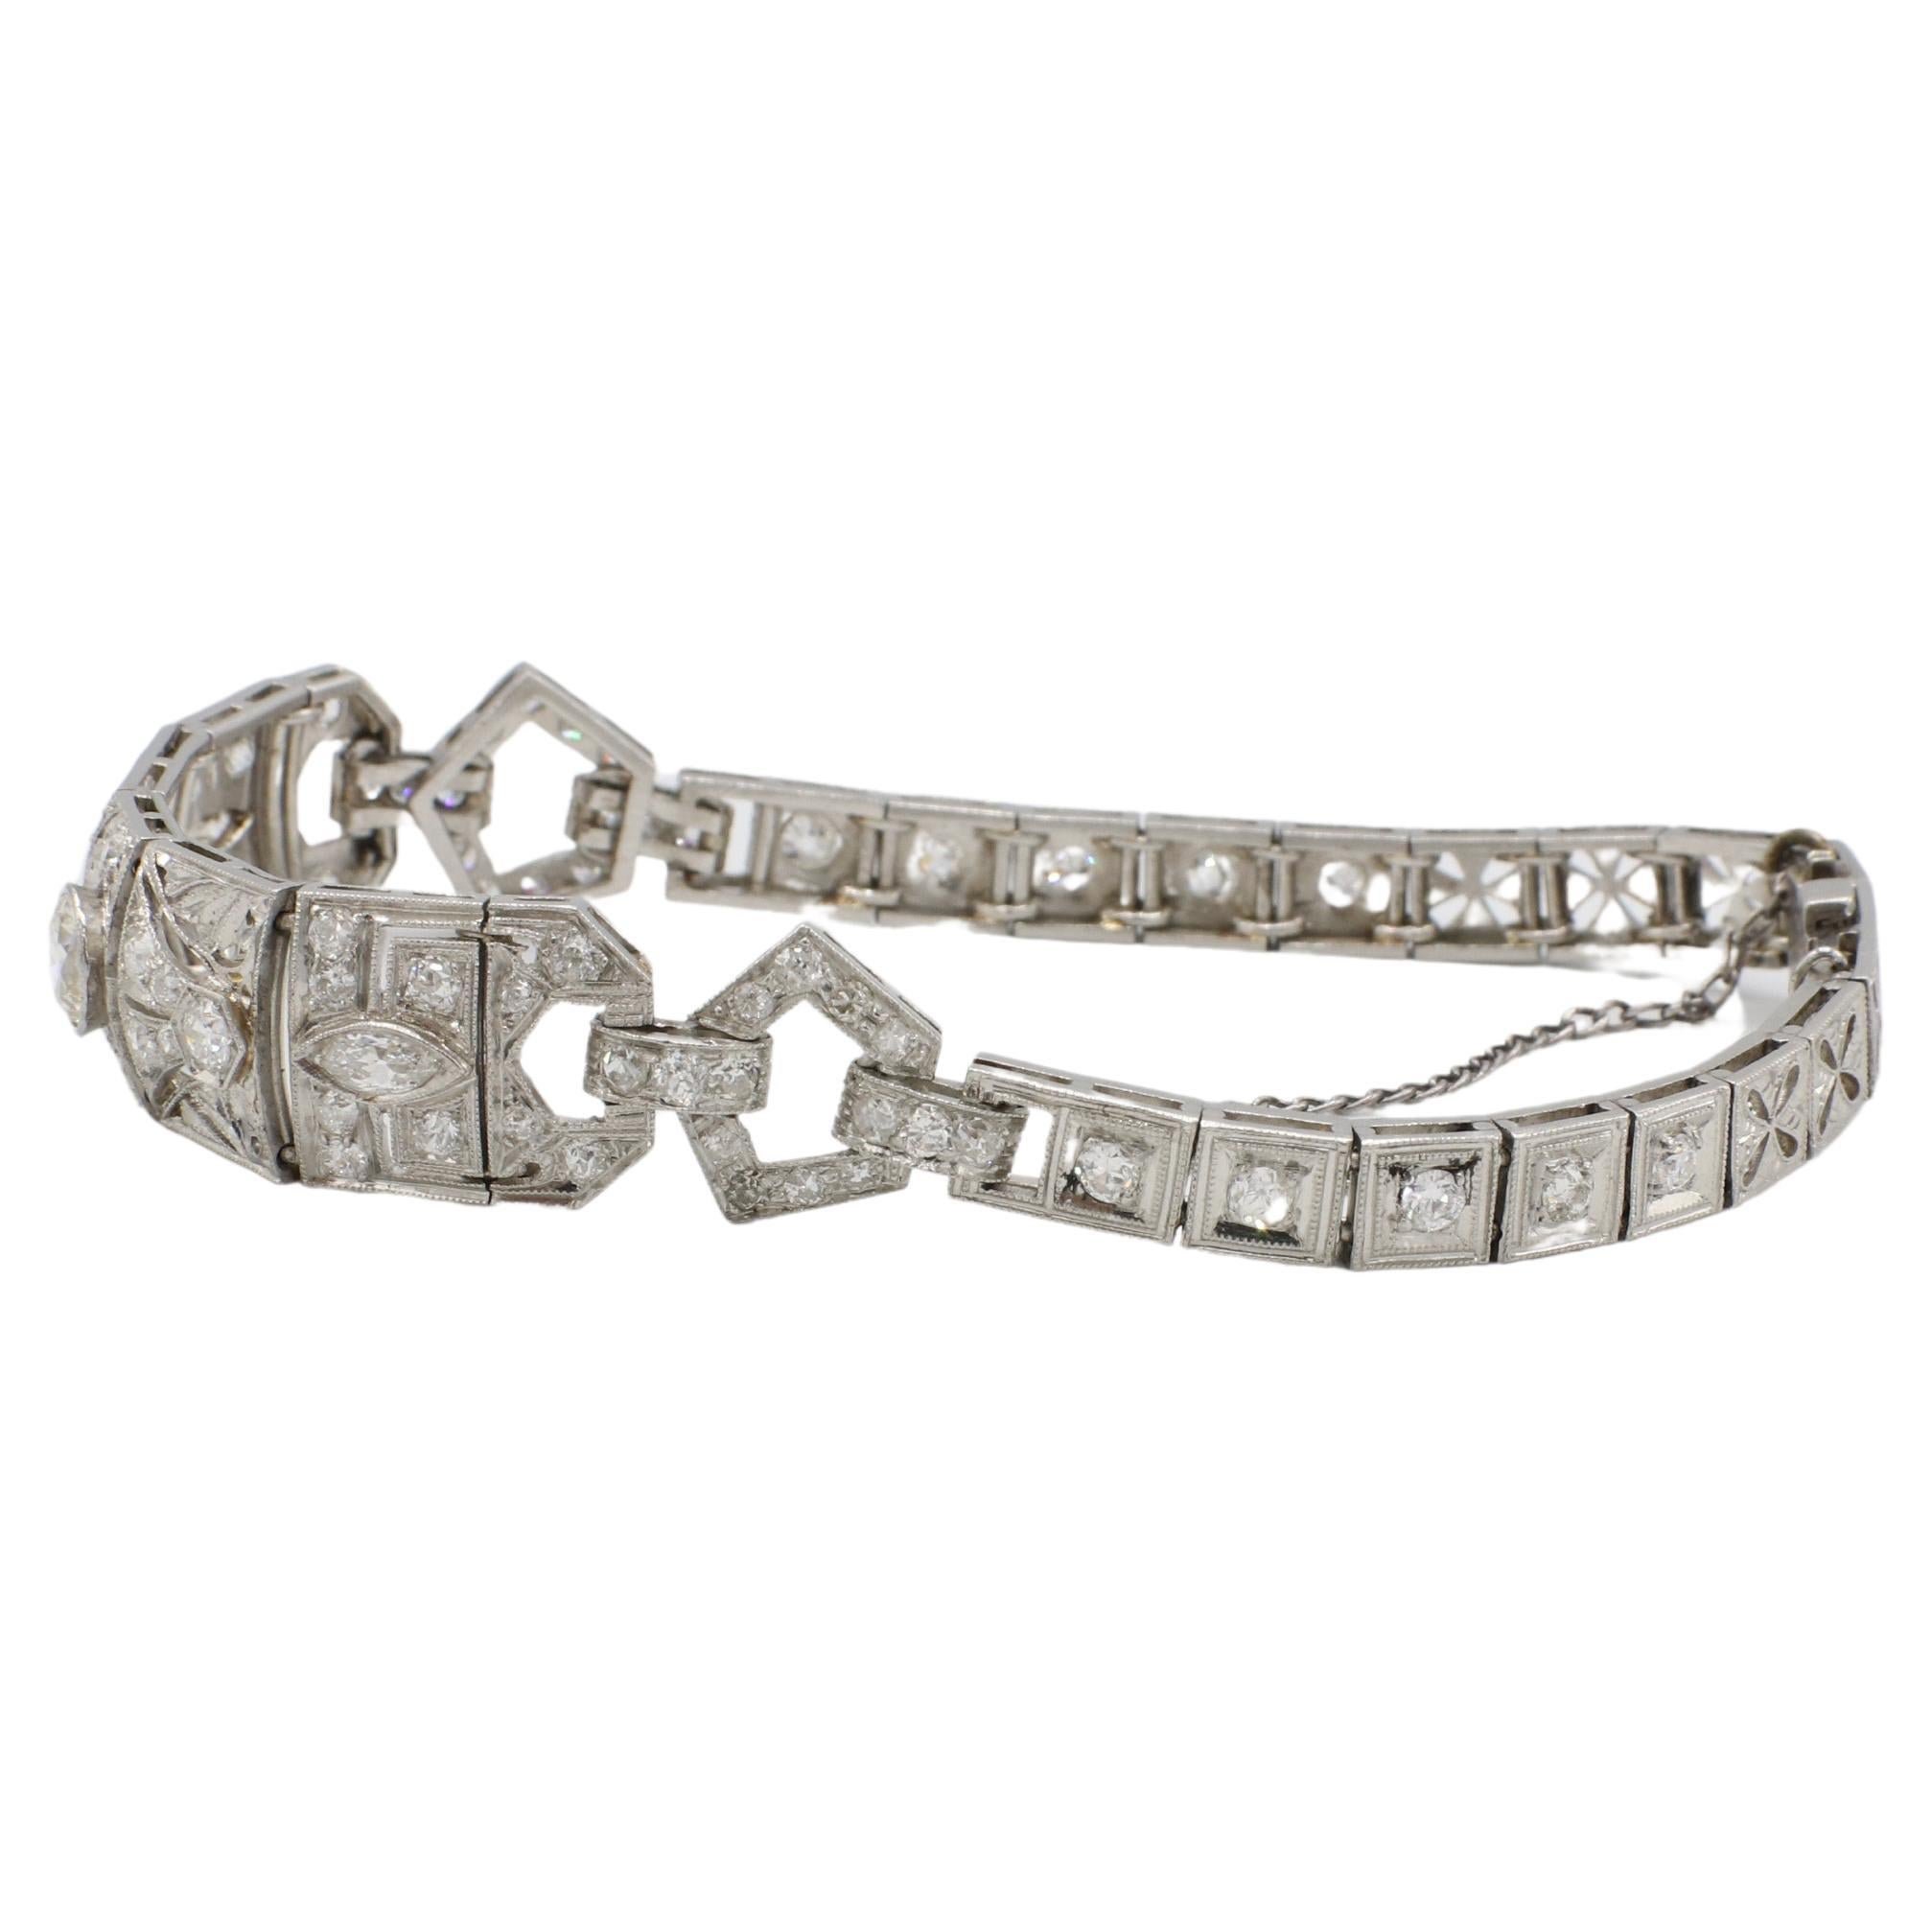 Art Deco Platinum 2.50 Carat Old European Cut Natural Diamond Bracelet 
Metal: Platinum
Weight: 19.14 grams
Length: Approx. 6.5 inches clasped
Width: 5 - 10.5mm
Diamonds: Approx. 2.50 CTW old european cut and marquise natural diamonds G-H VS
Note: